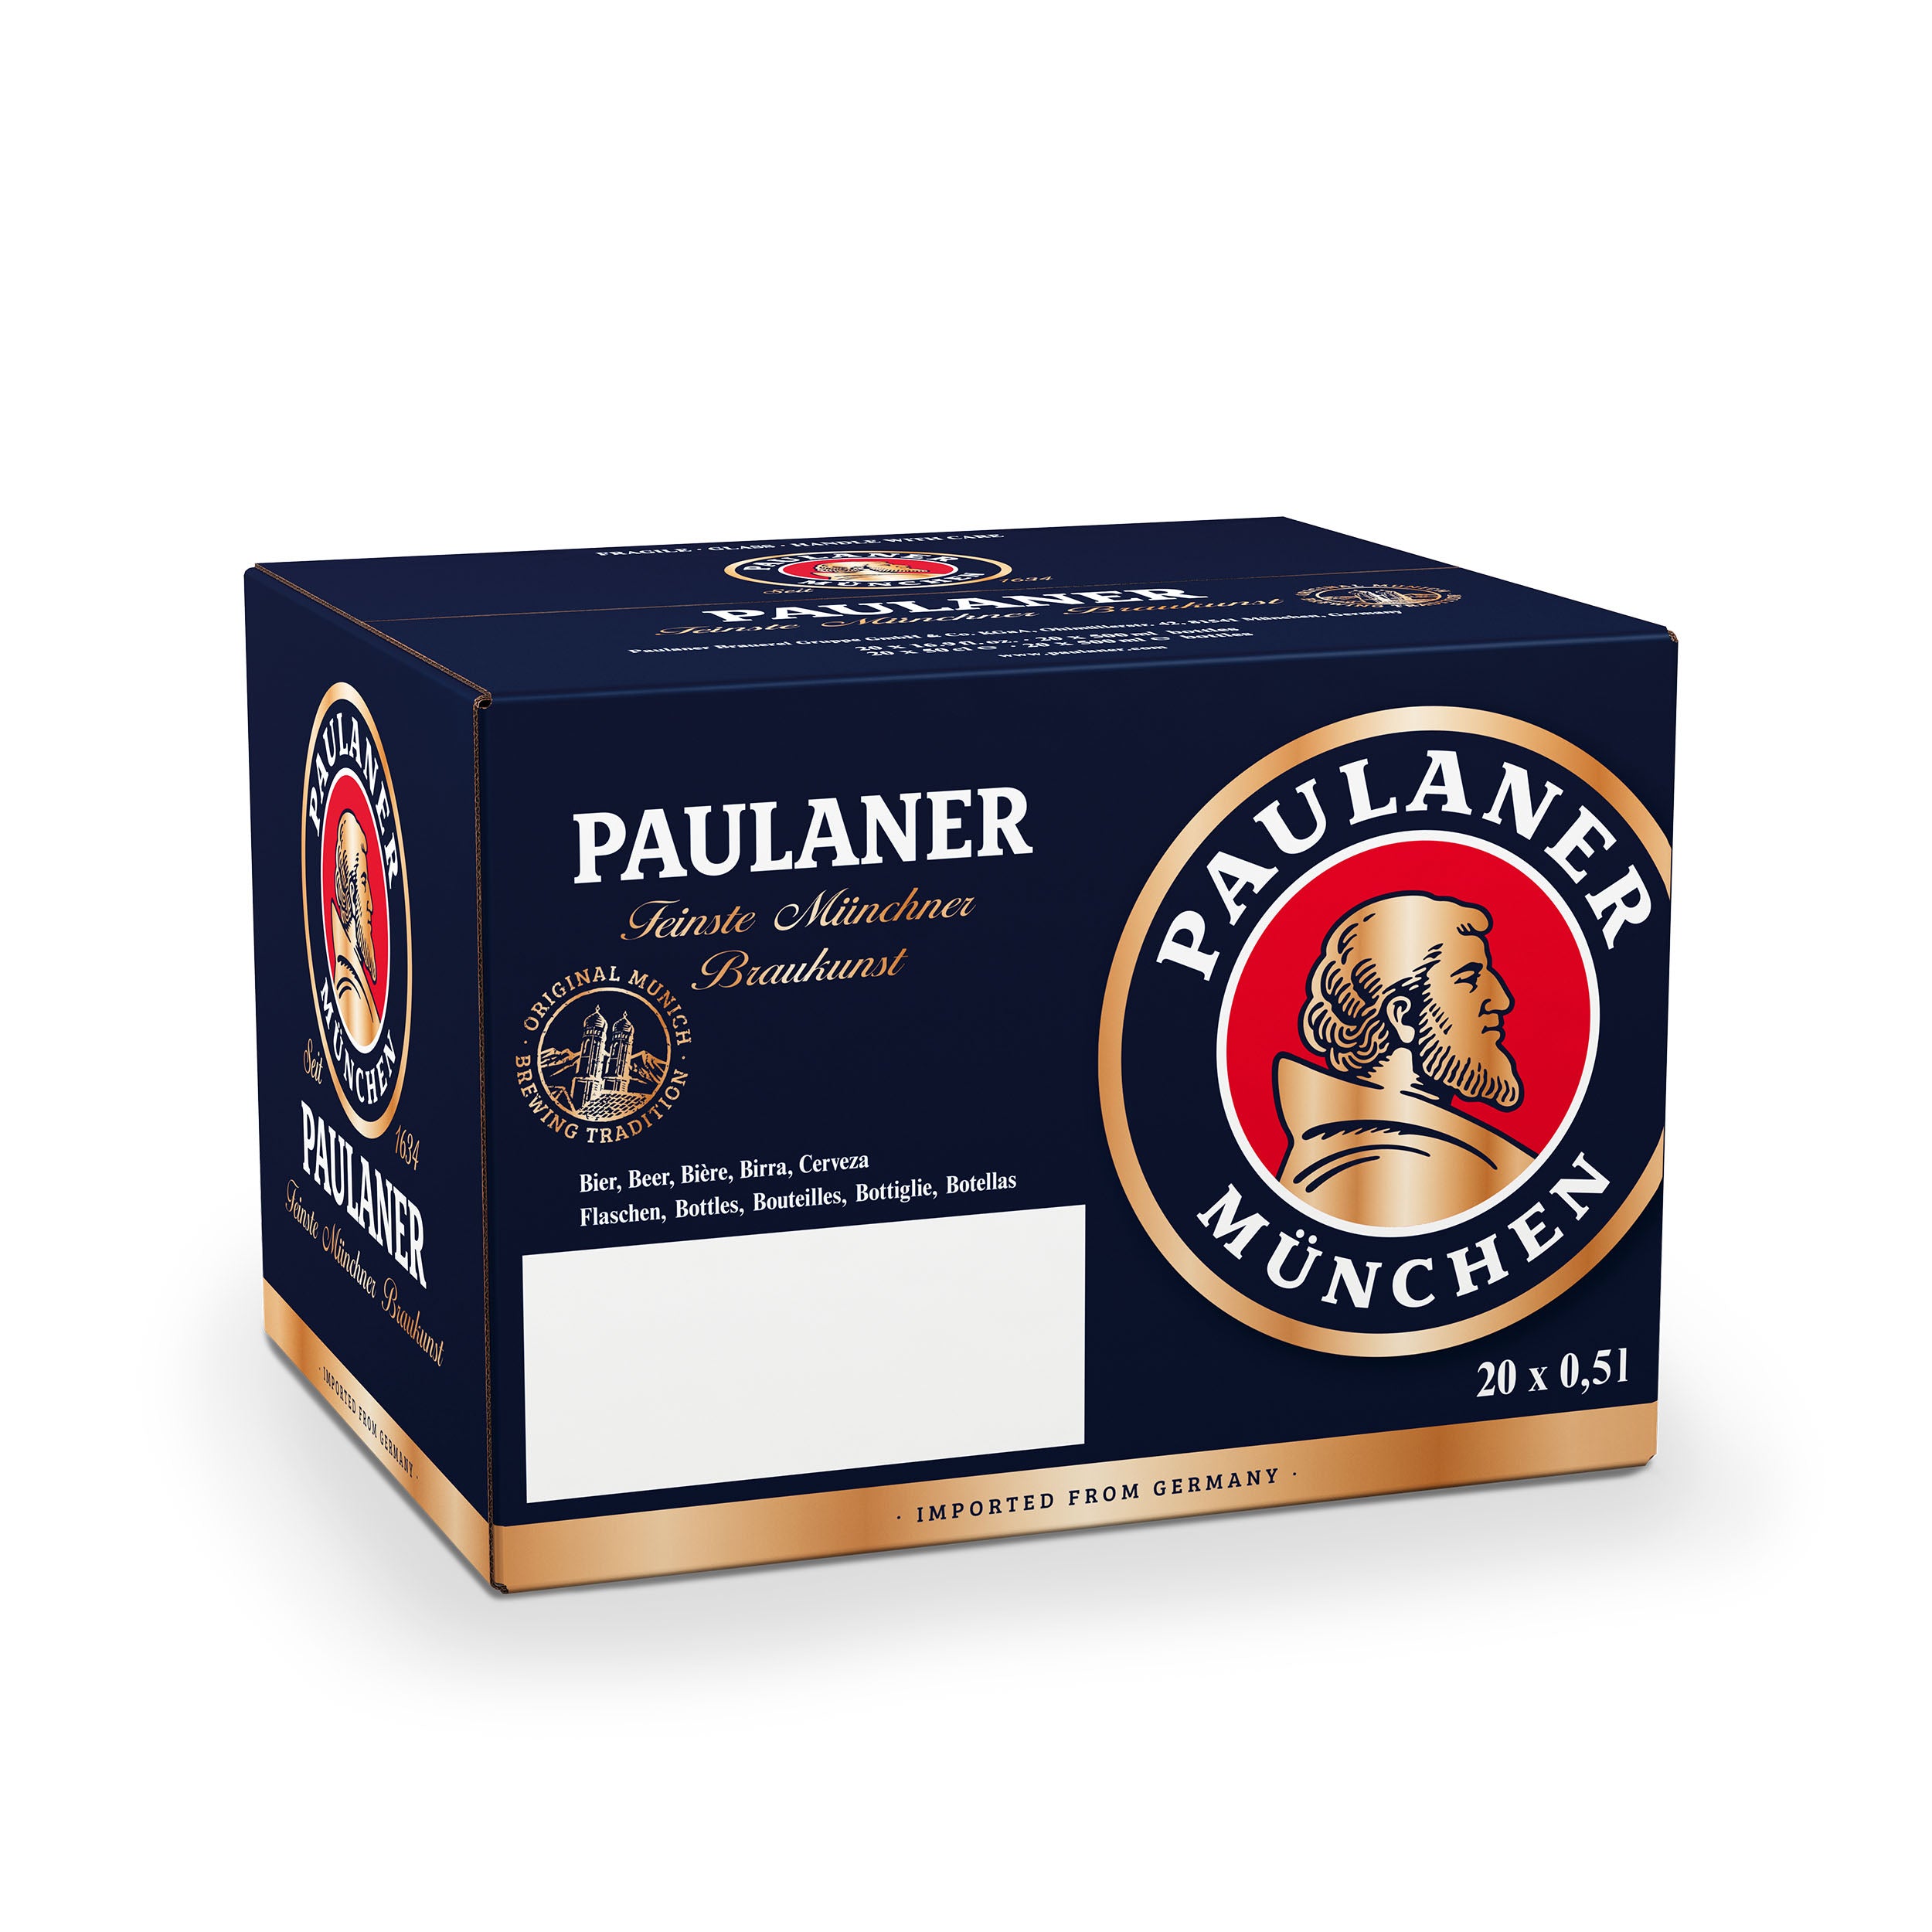 PAULANER Oktoberfest Bier botella - 500 ml